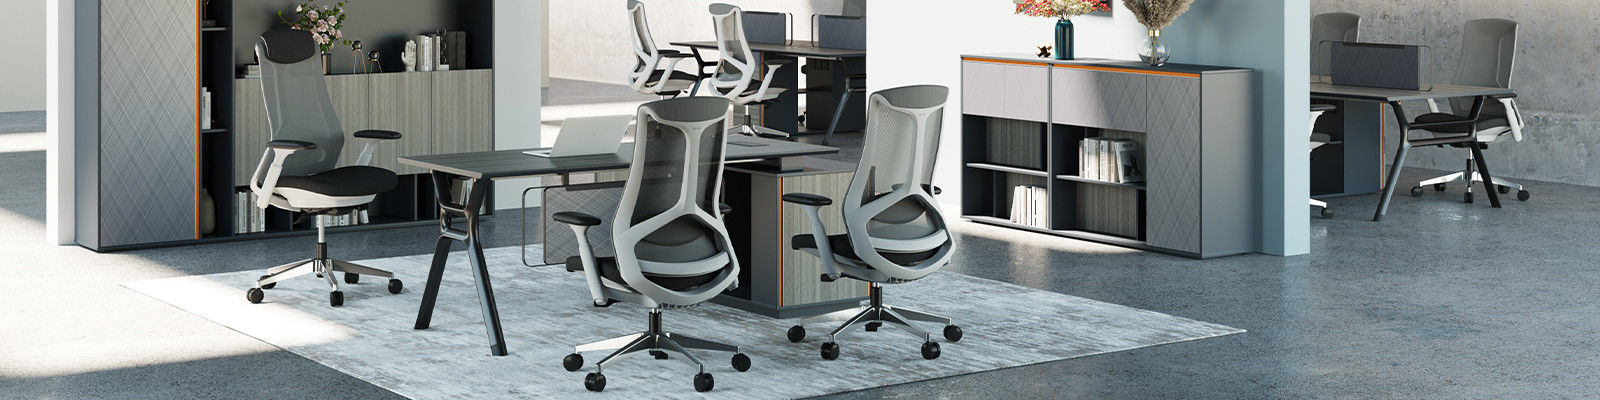 Office Ergonomic Chairs